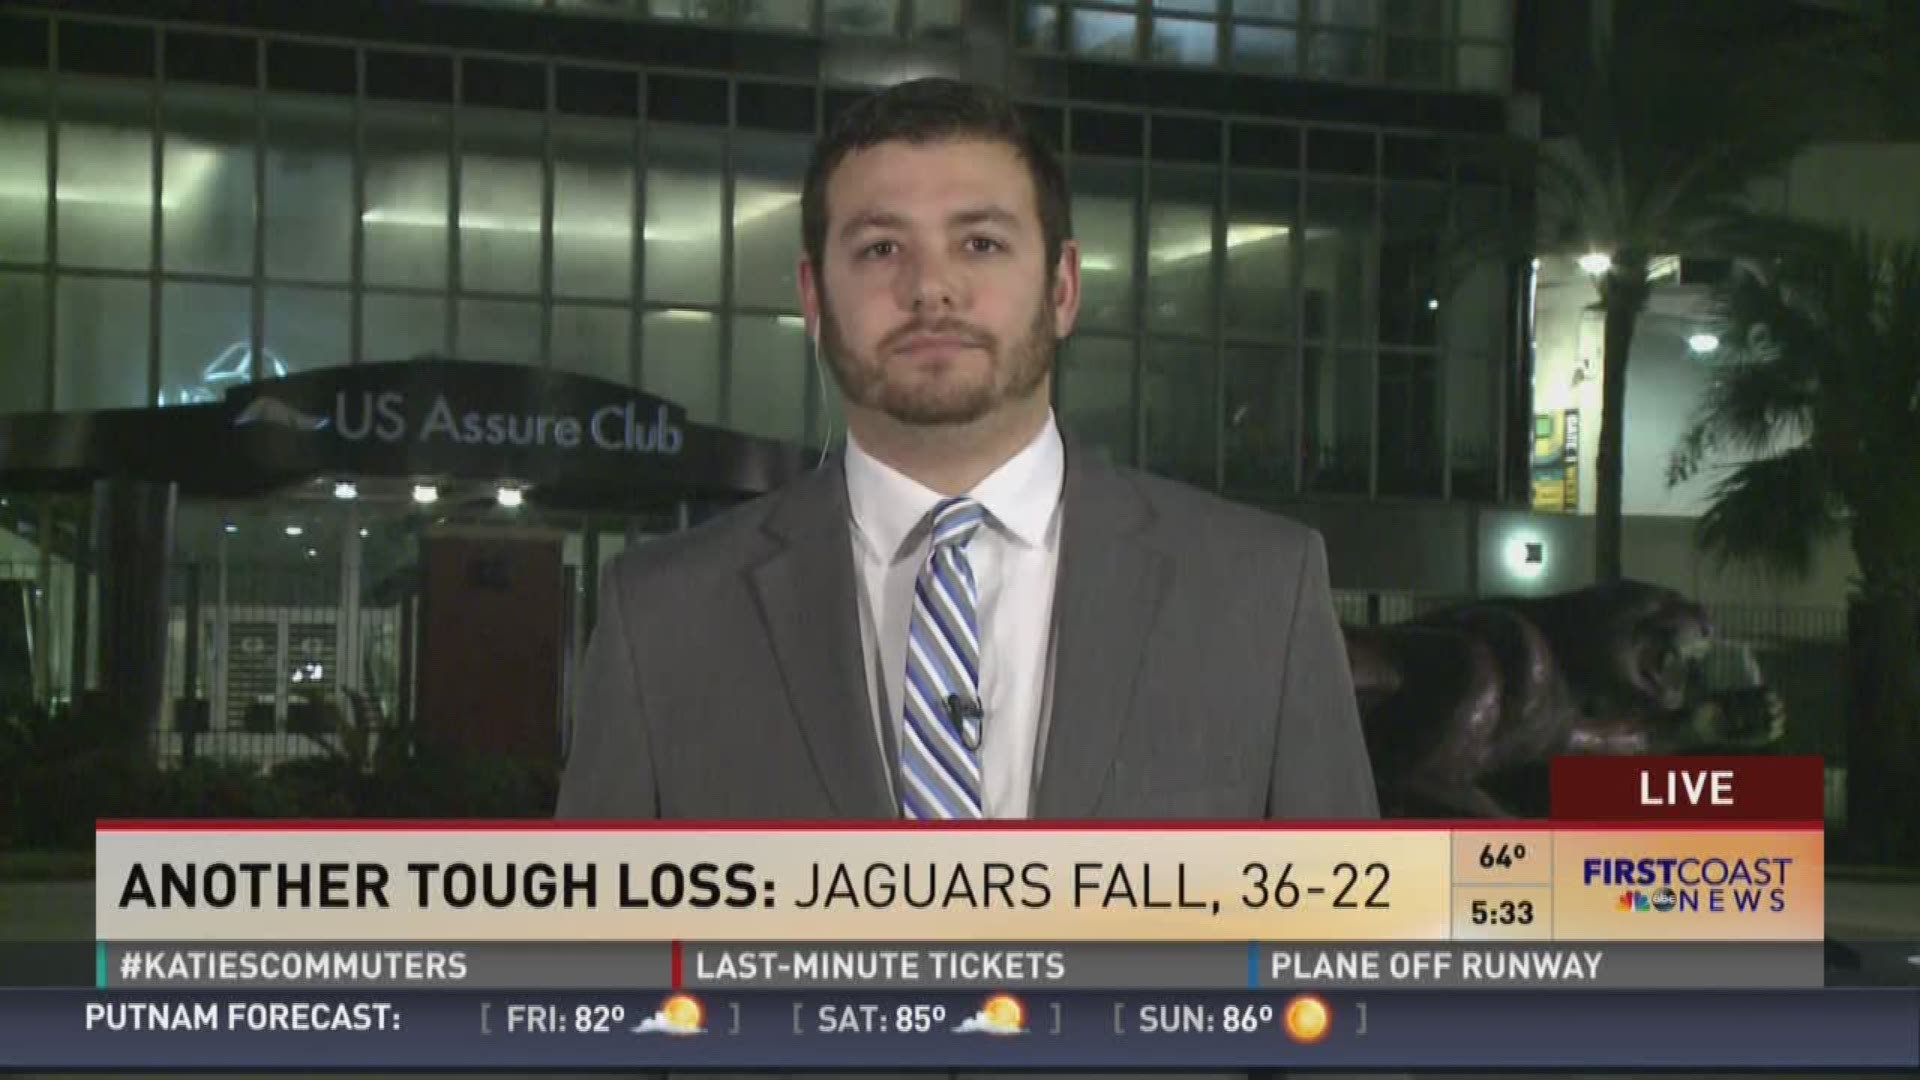 Jaguars lose 36-22 to the Titans